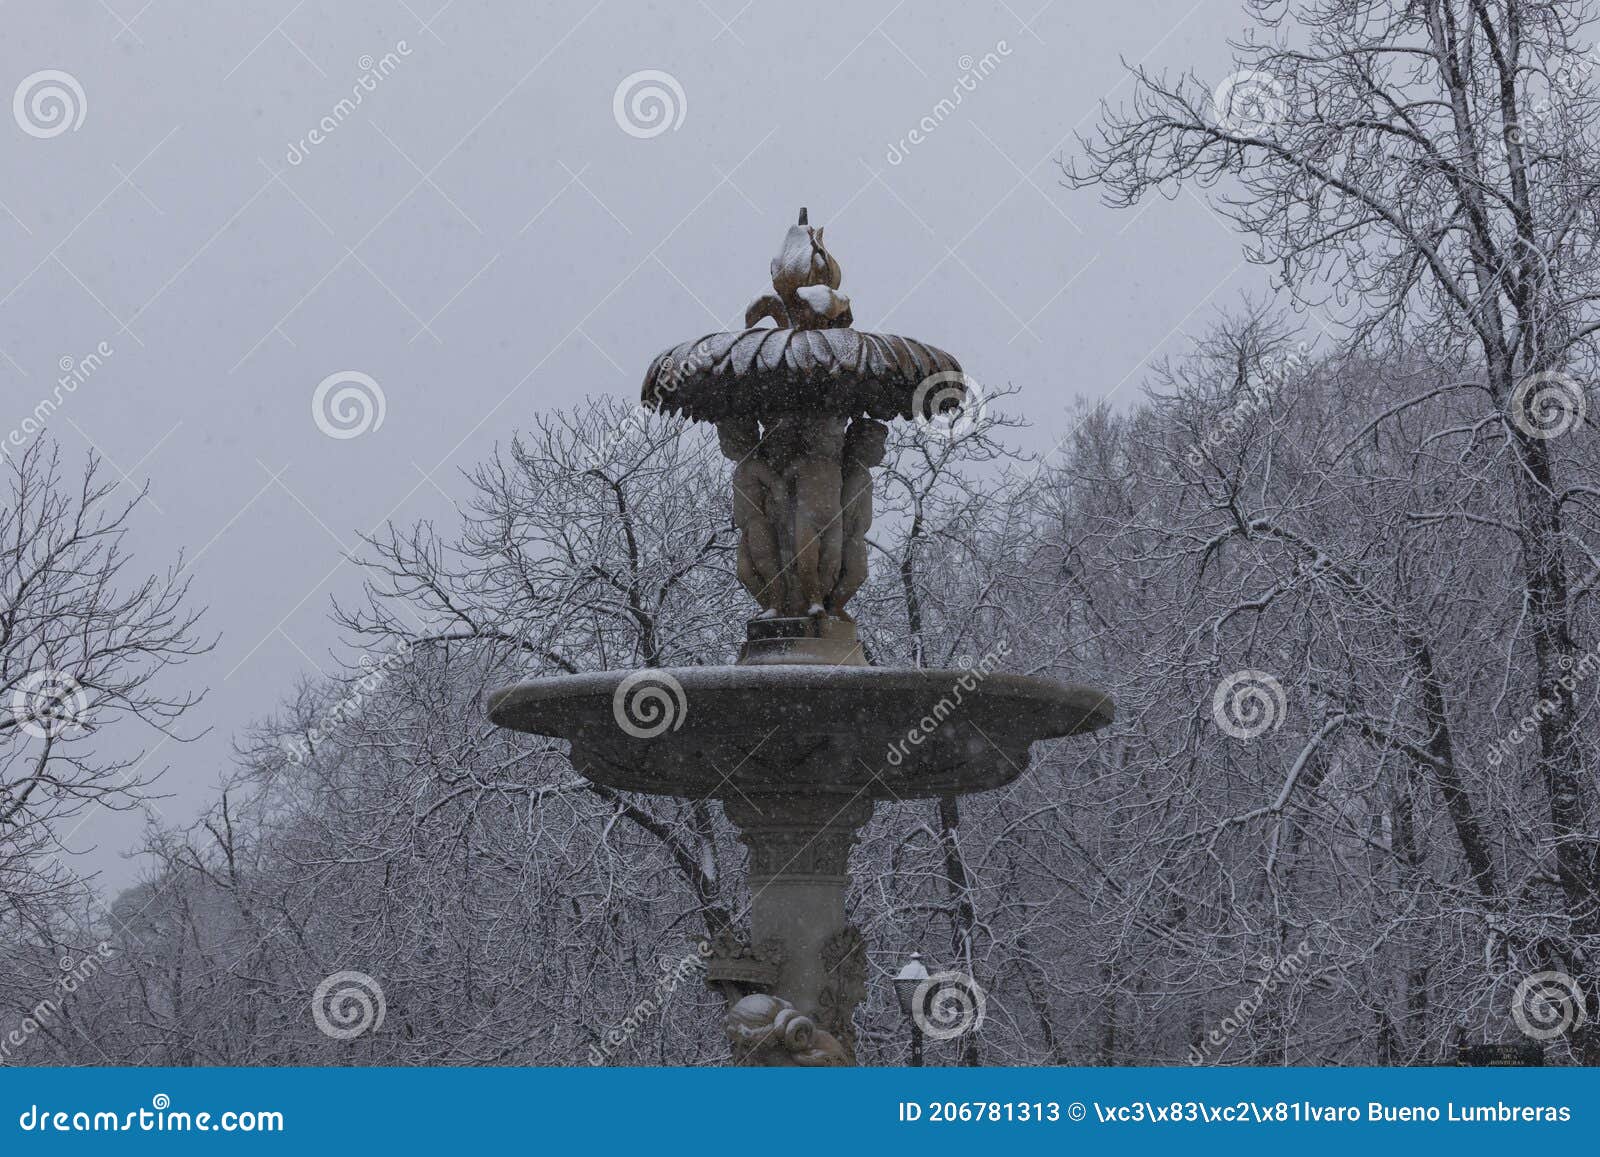 famous alcachofa fountain, in retiro, madrid, in a snowy day